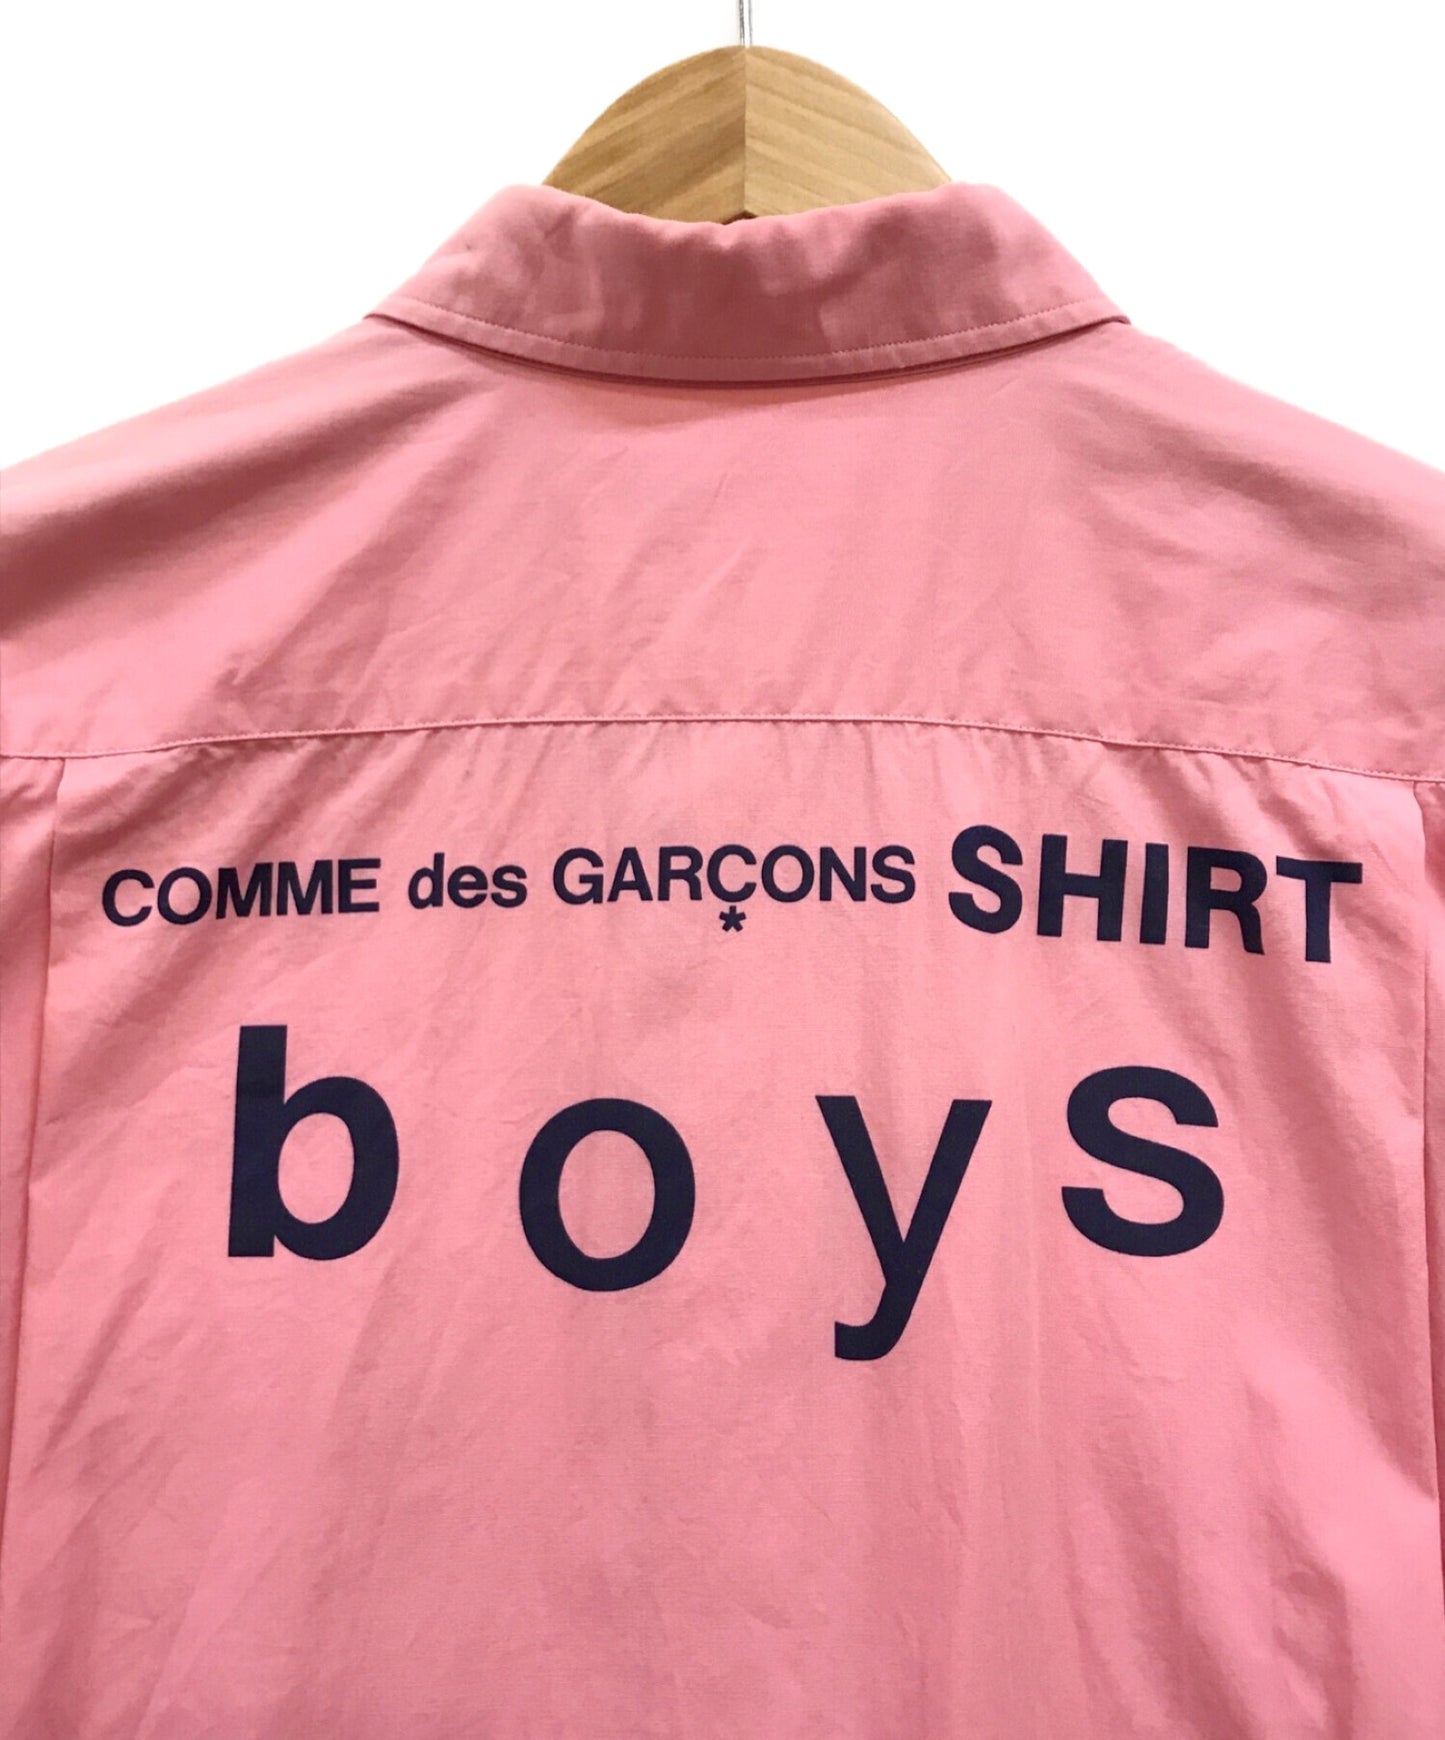 Comme des Garcons衬衫男孩背部印刷衬衫